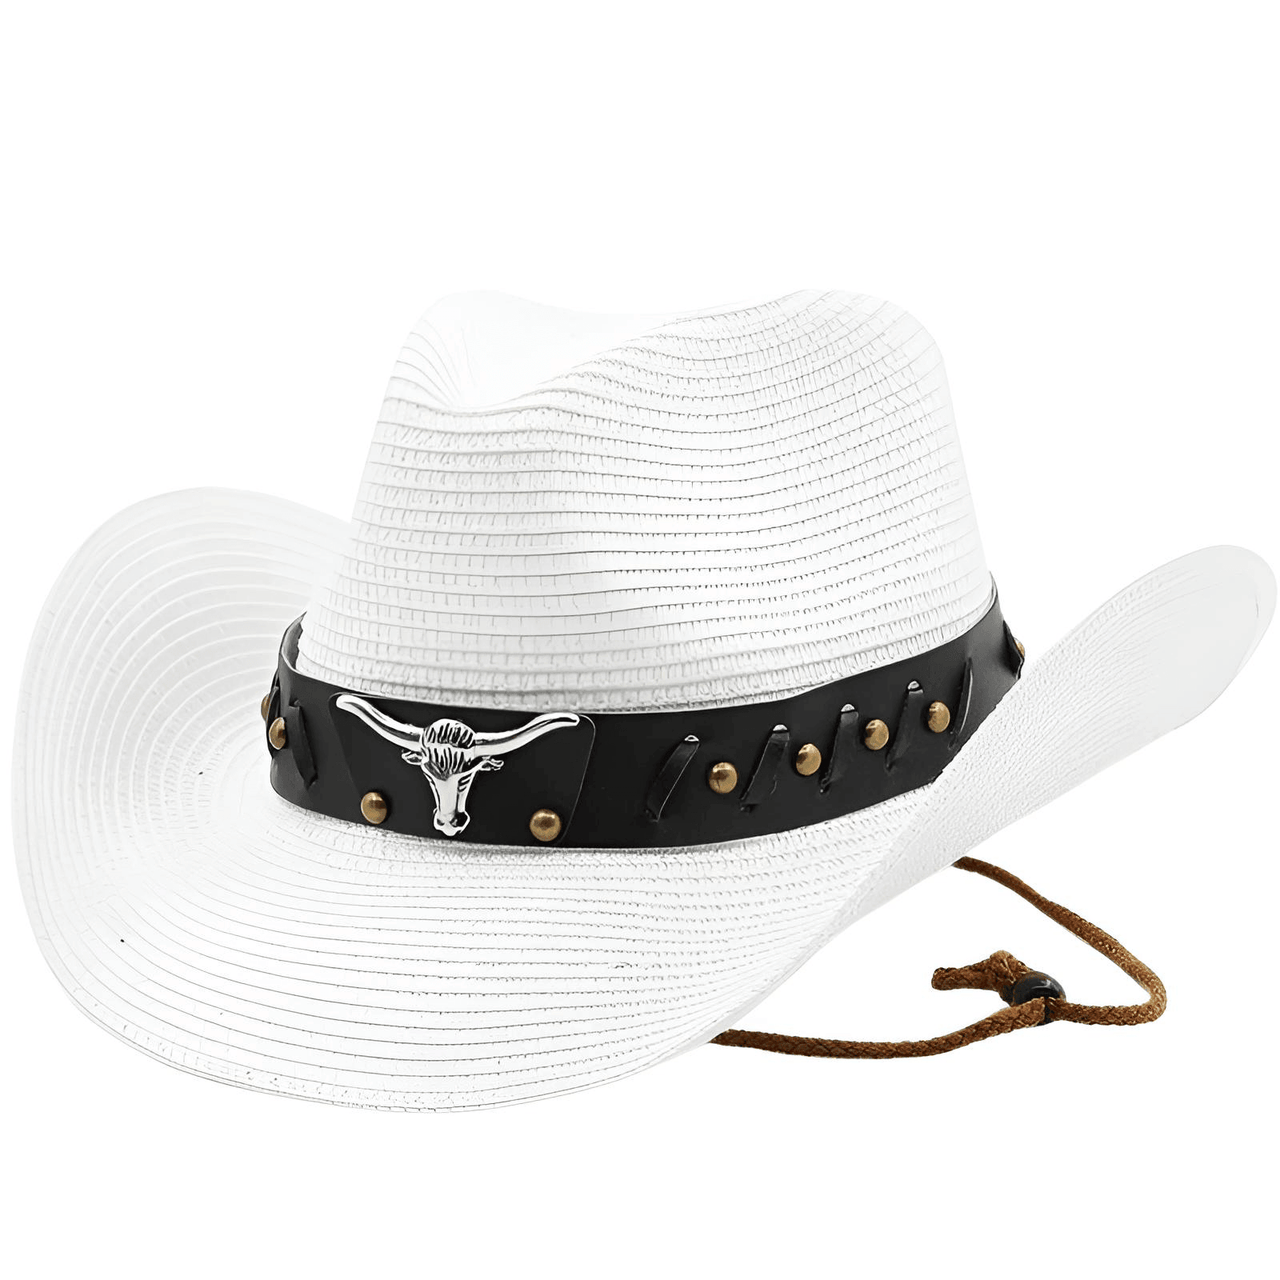 Western Cowboy Hats For Men Women Summer Outdoor Beach Sun Hat -, Hats , Drestiny , Australia, Beige, Black, Brown, Canada, Coffee, Gender_Men, Gender_Women, Hats, Khaki, New Zealand, Off White, United Kingdom, United States, White , Drestiny , www.shopdrestiny.com